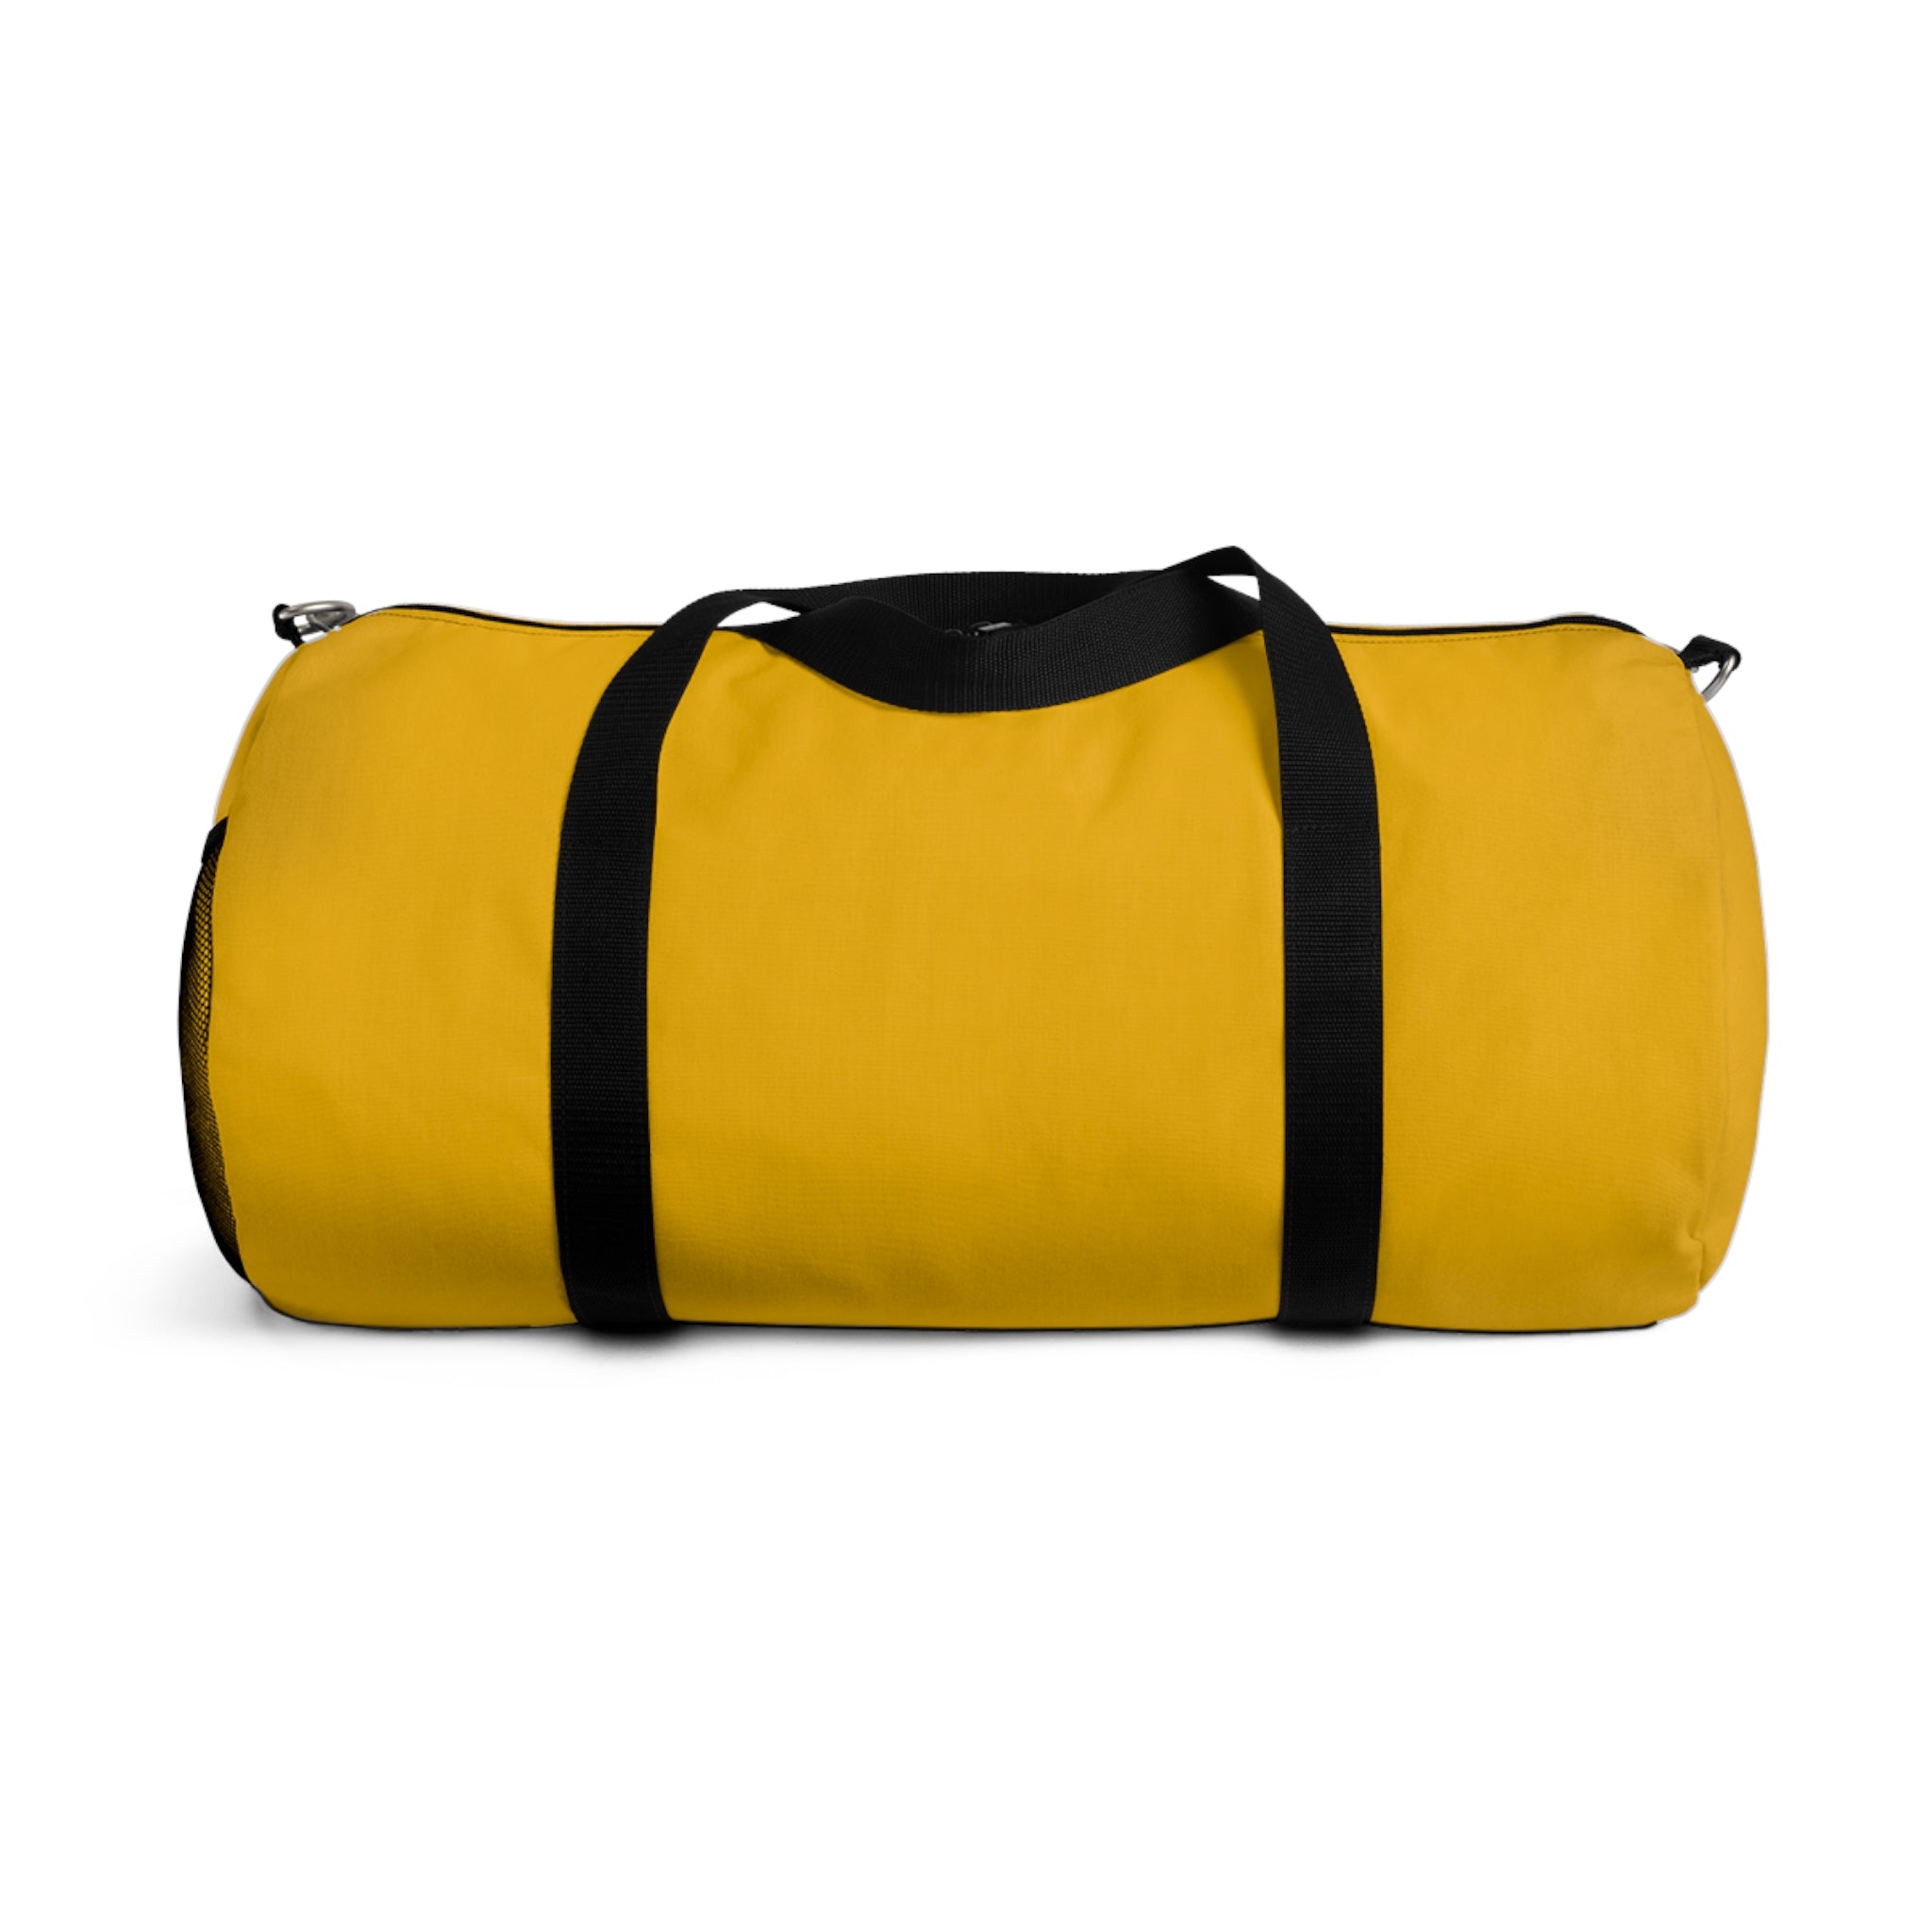 Layover stuff Duffle Bag (Yellow)